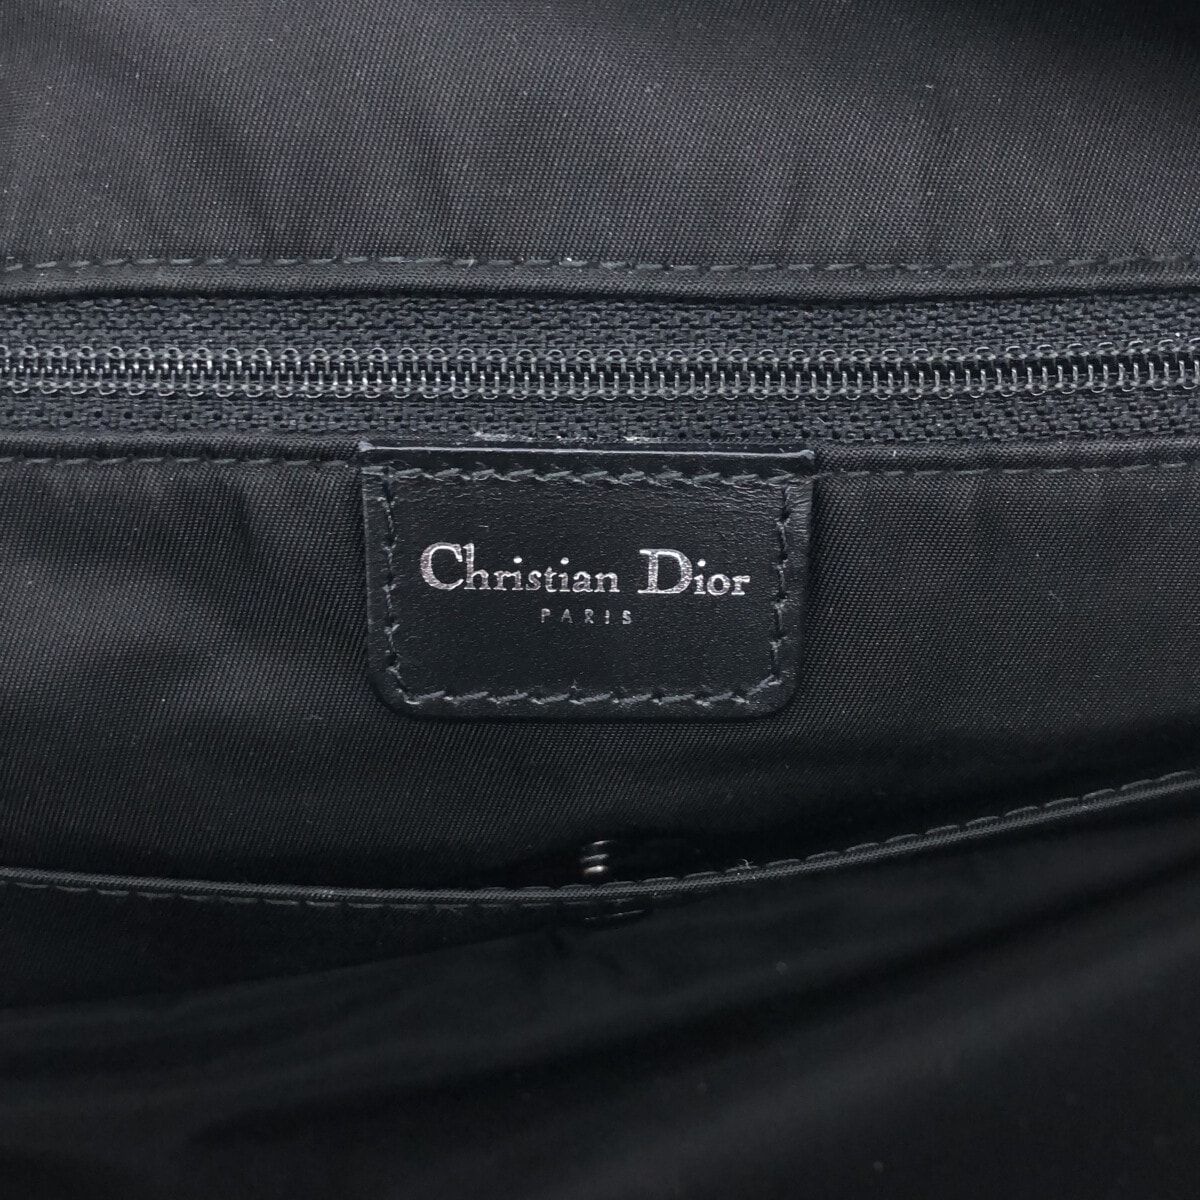 DIOR/ChristianDior(ディオール/クリスチャンディオール) ハンドバッグ ダブルサドルバッグ ネイビー×白×黒 ジャガード×レザー